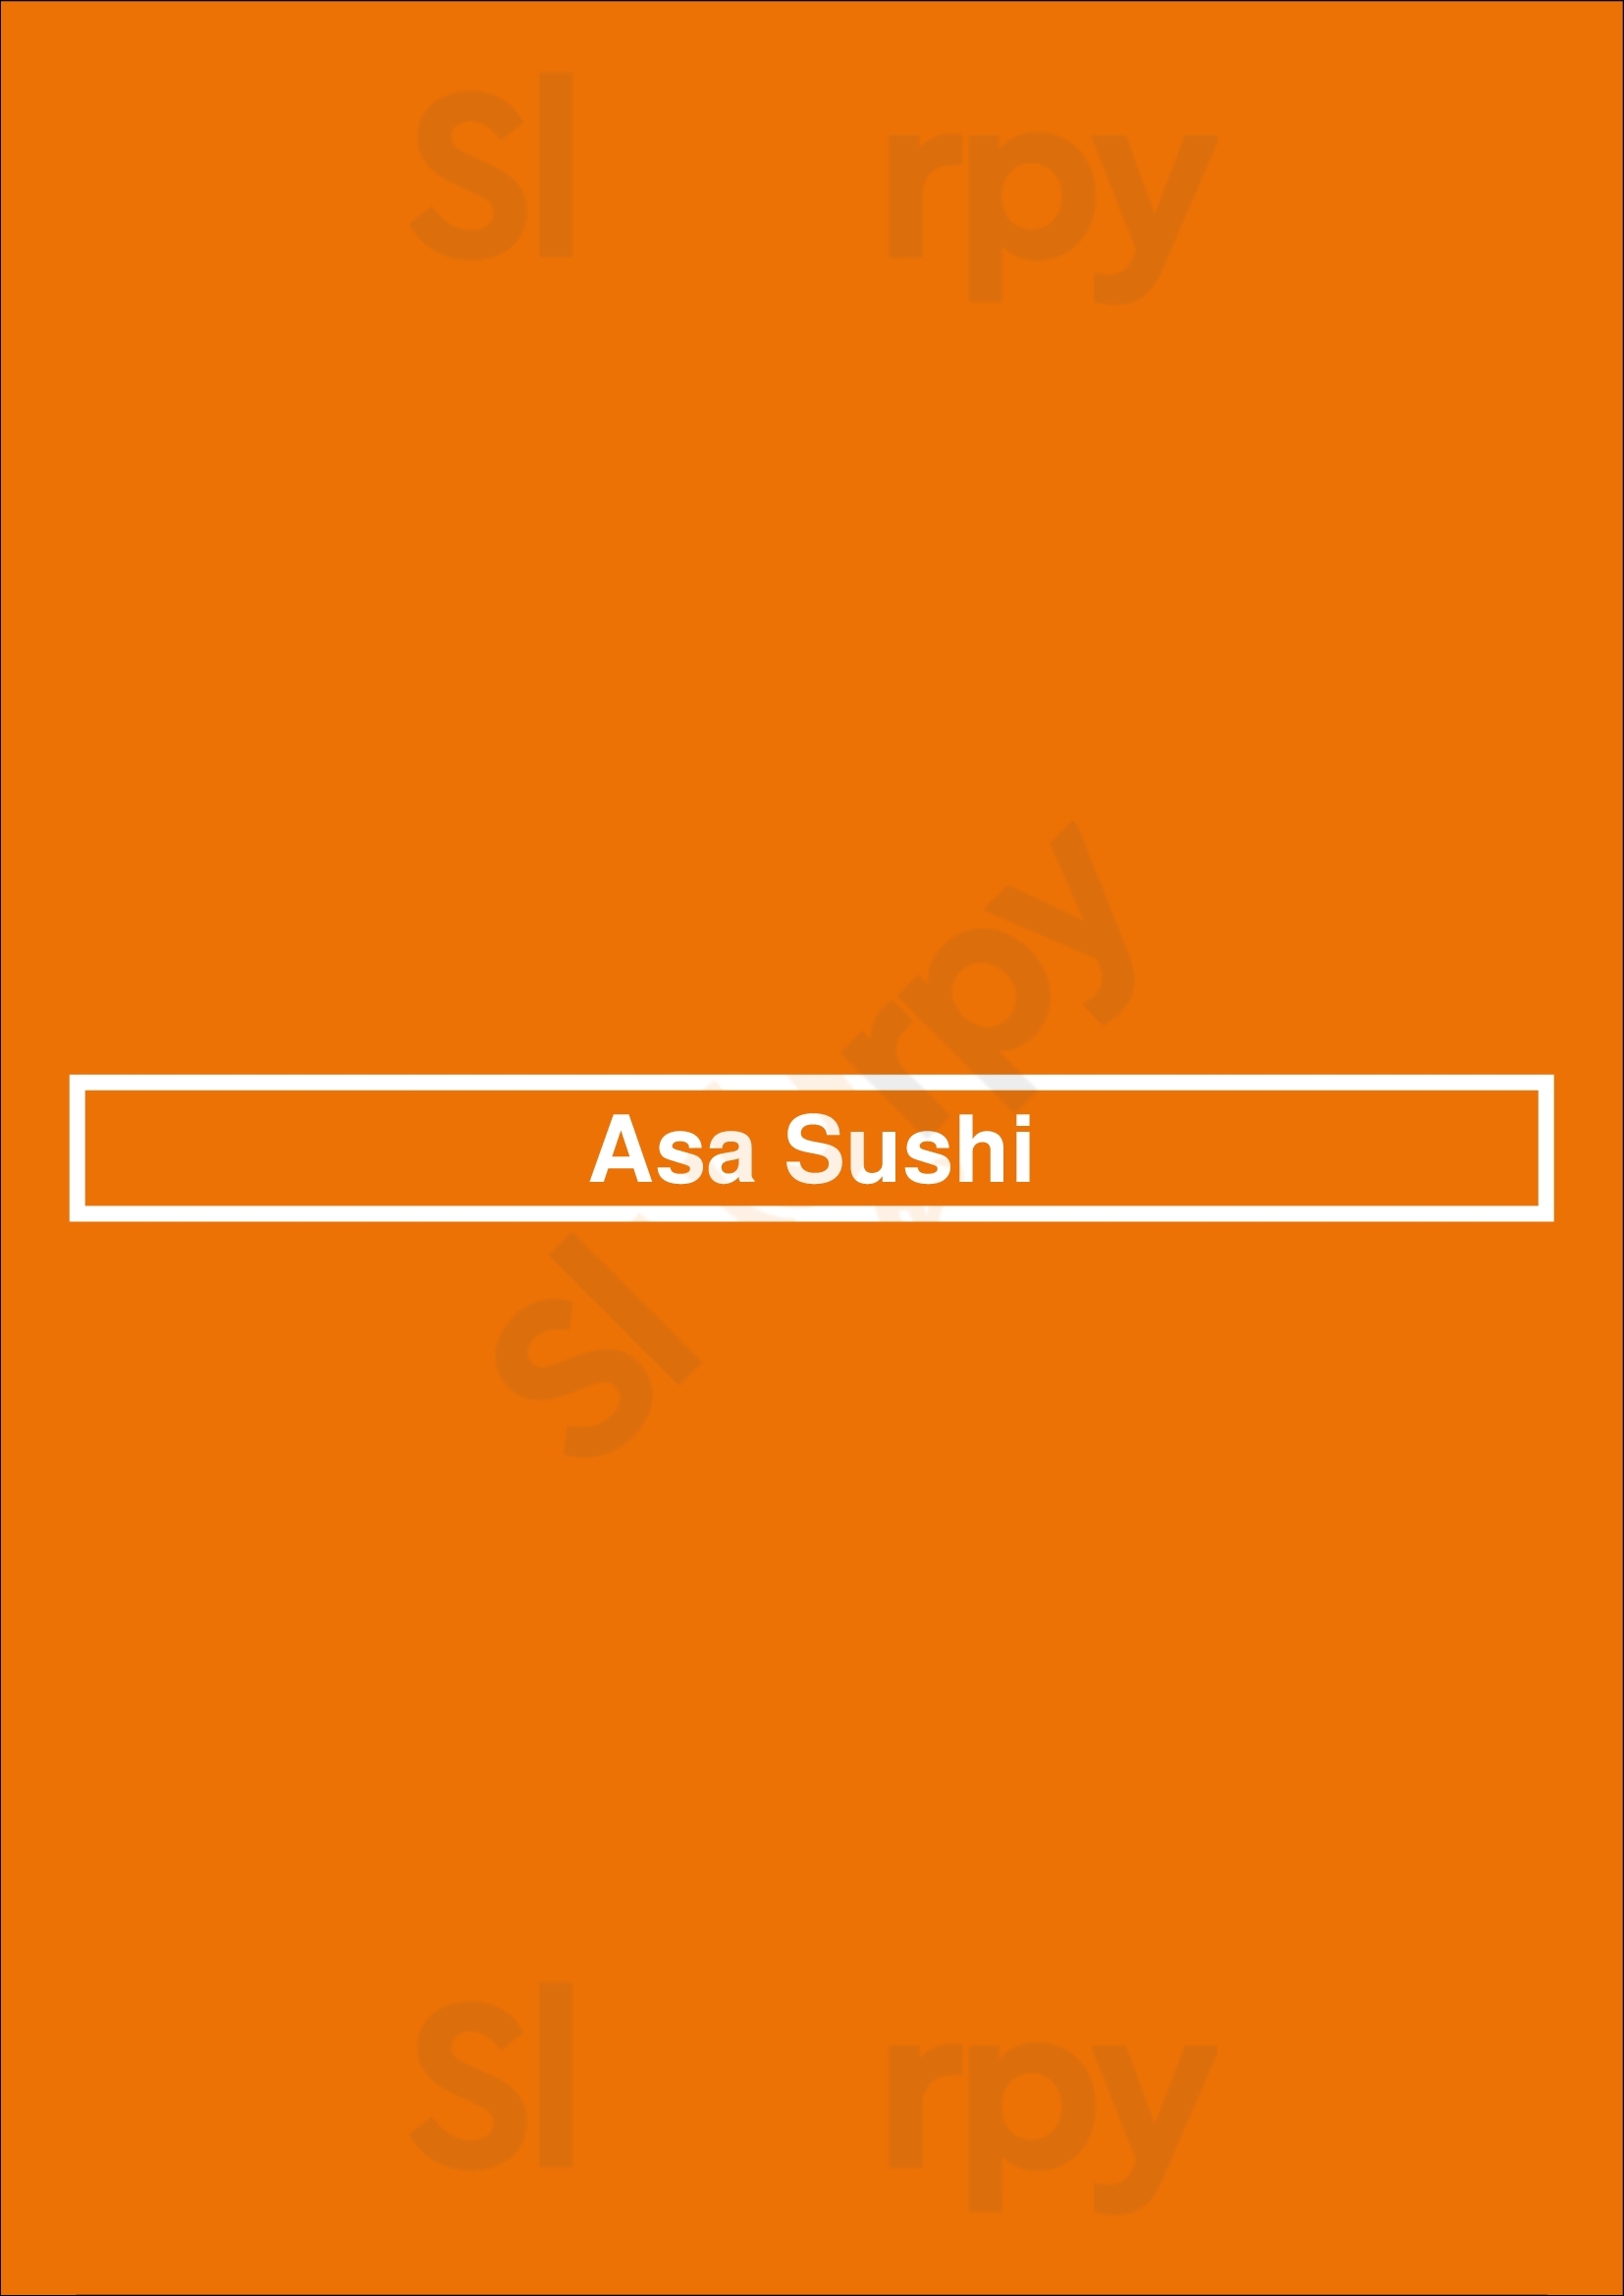 Asa Sushi Vancouver Menu - 1